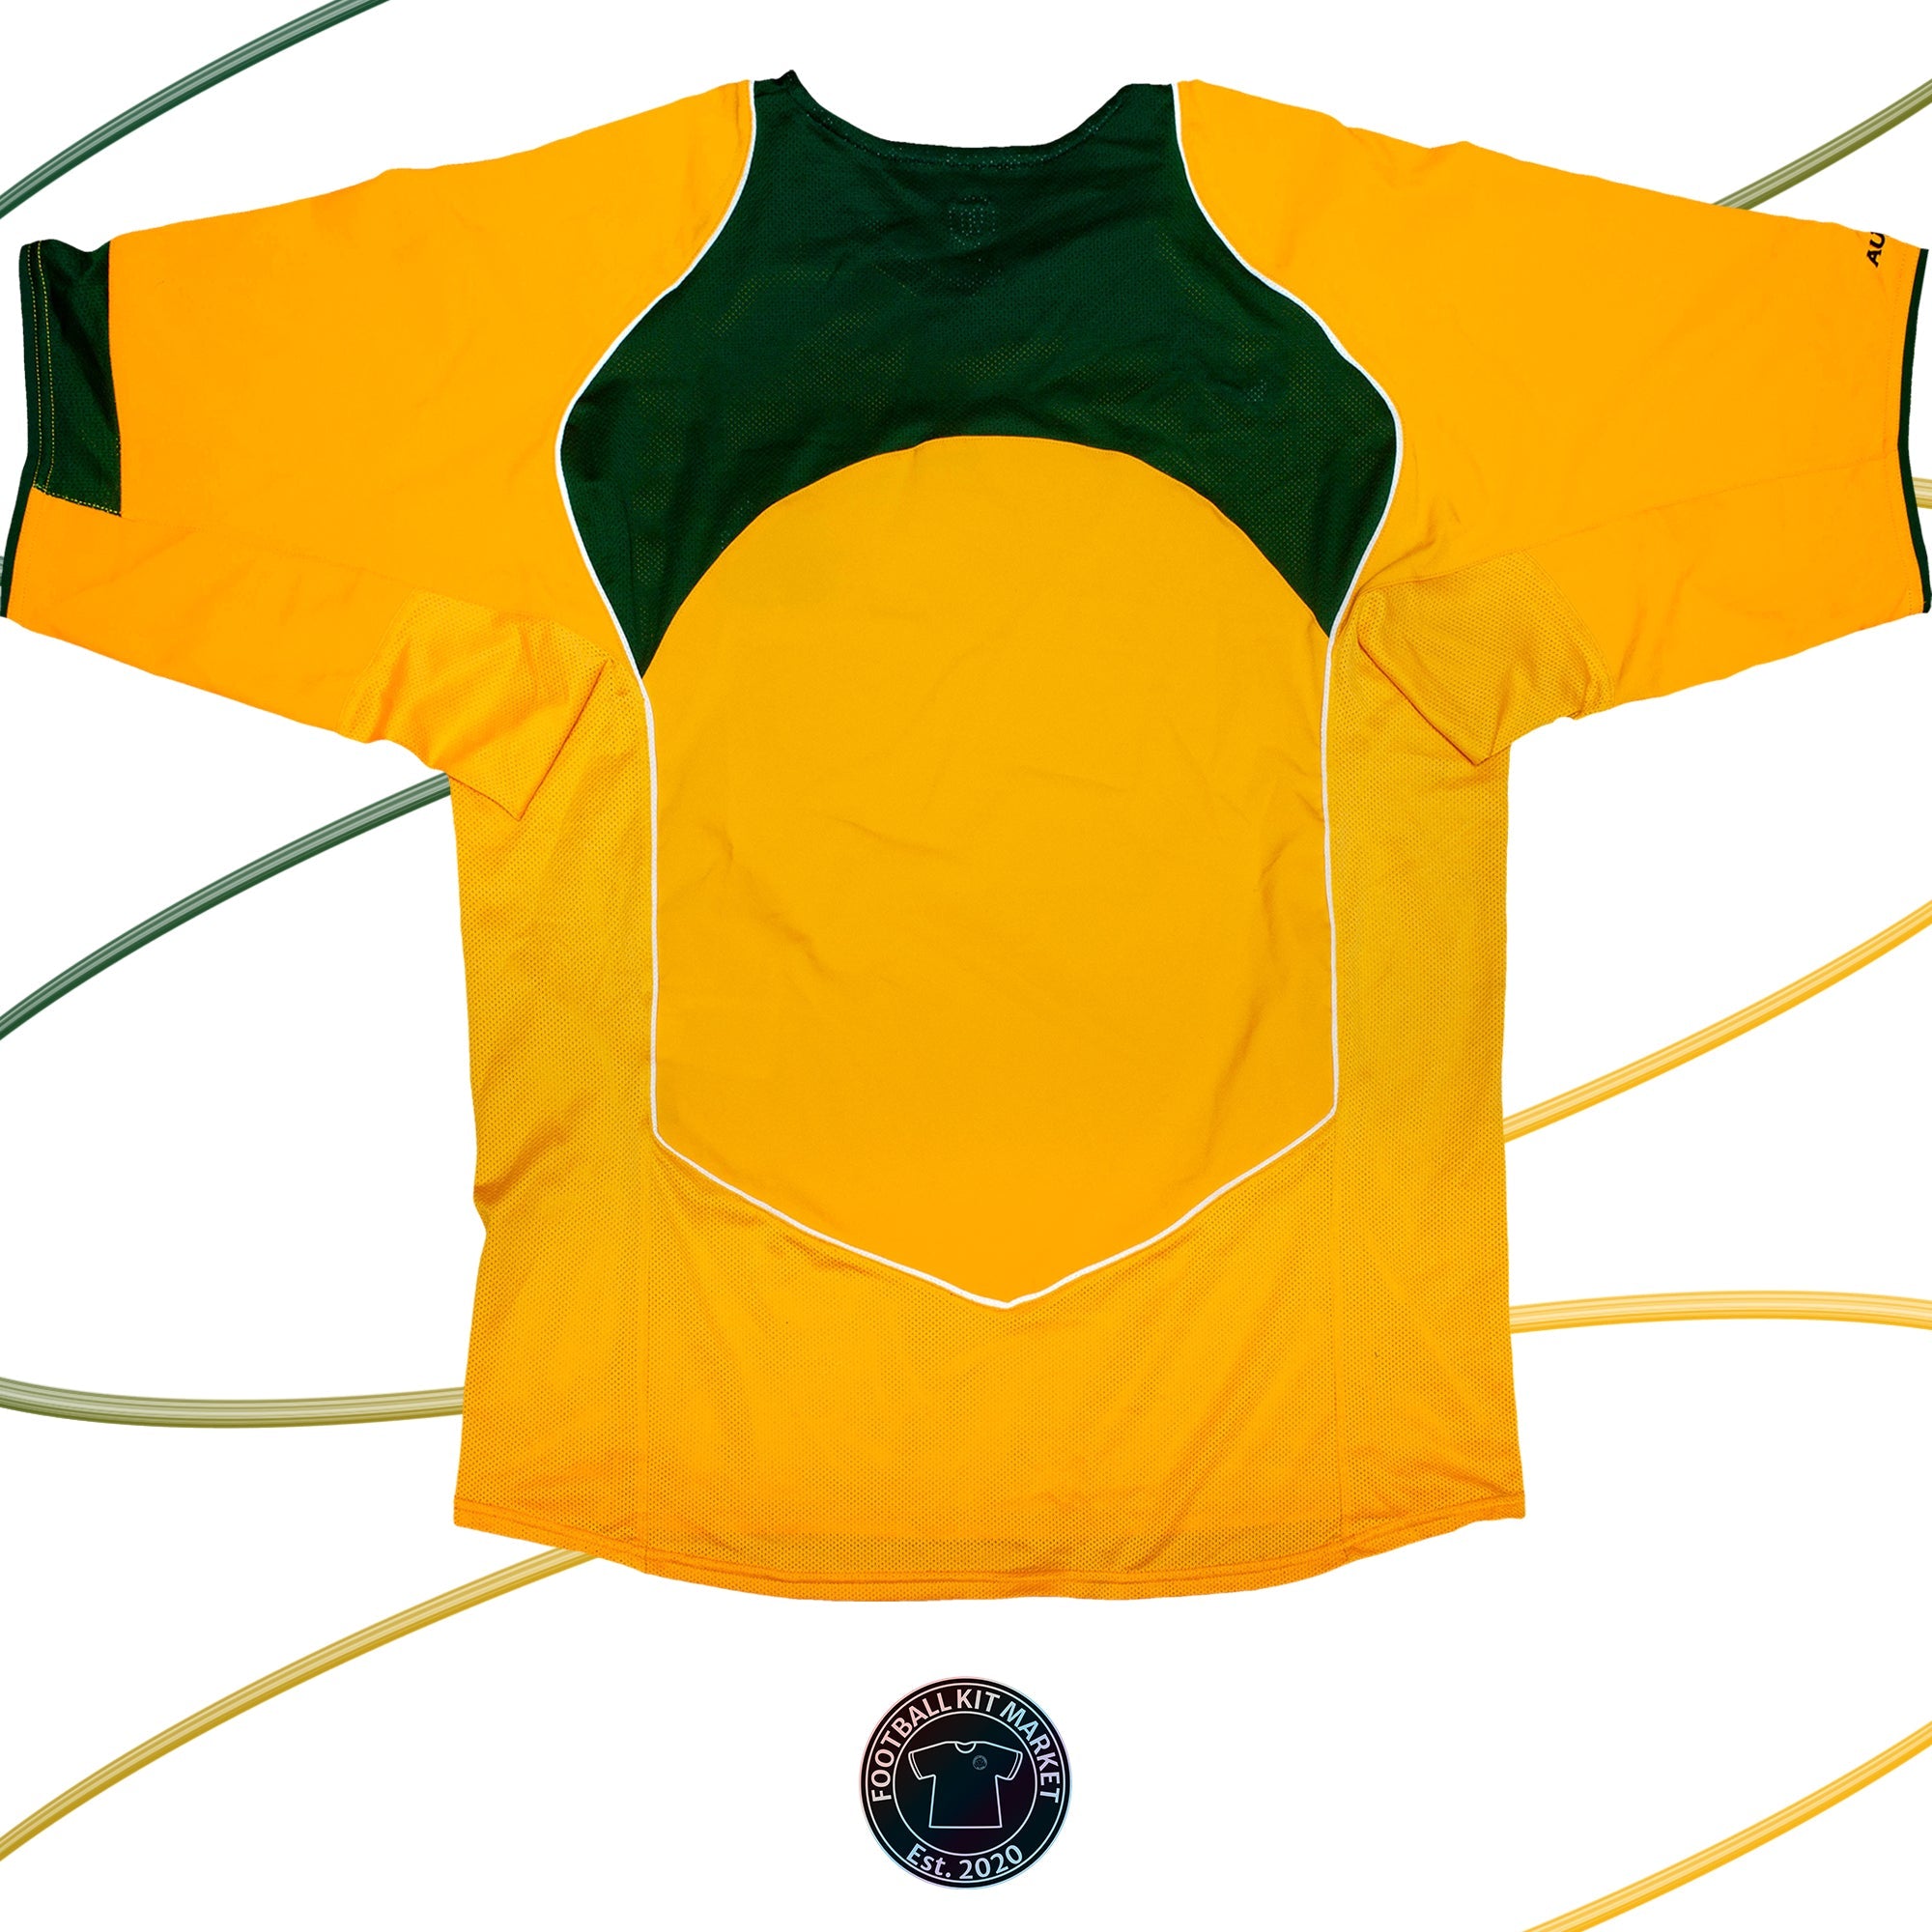 Genuine AUSTRALIA Home (2004-2006) - NIKE (XL) - Product Image from Football Kit Market